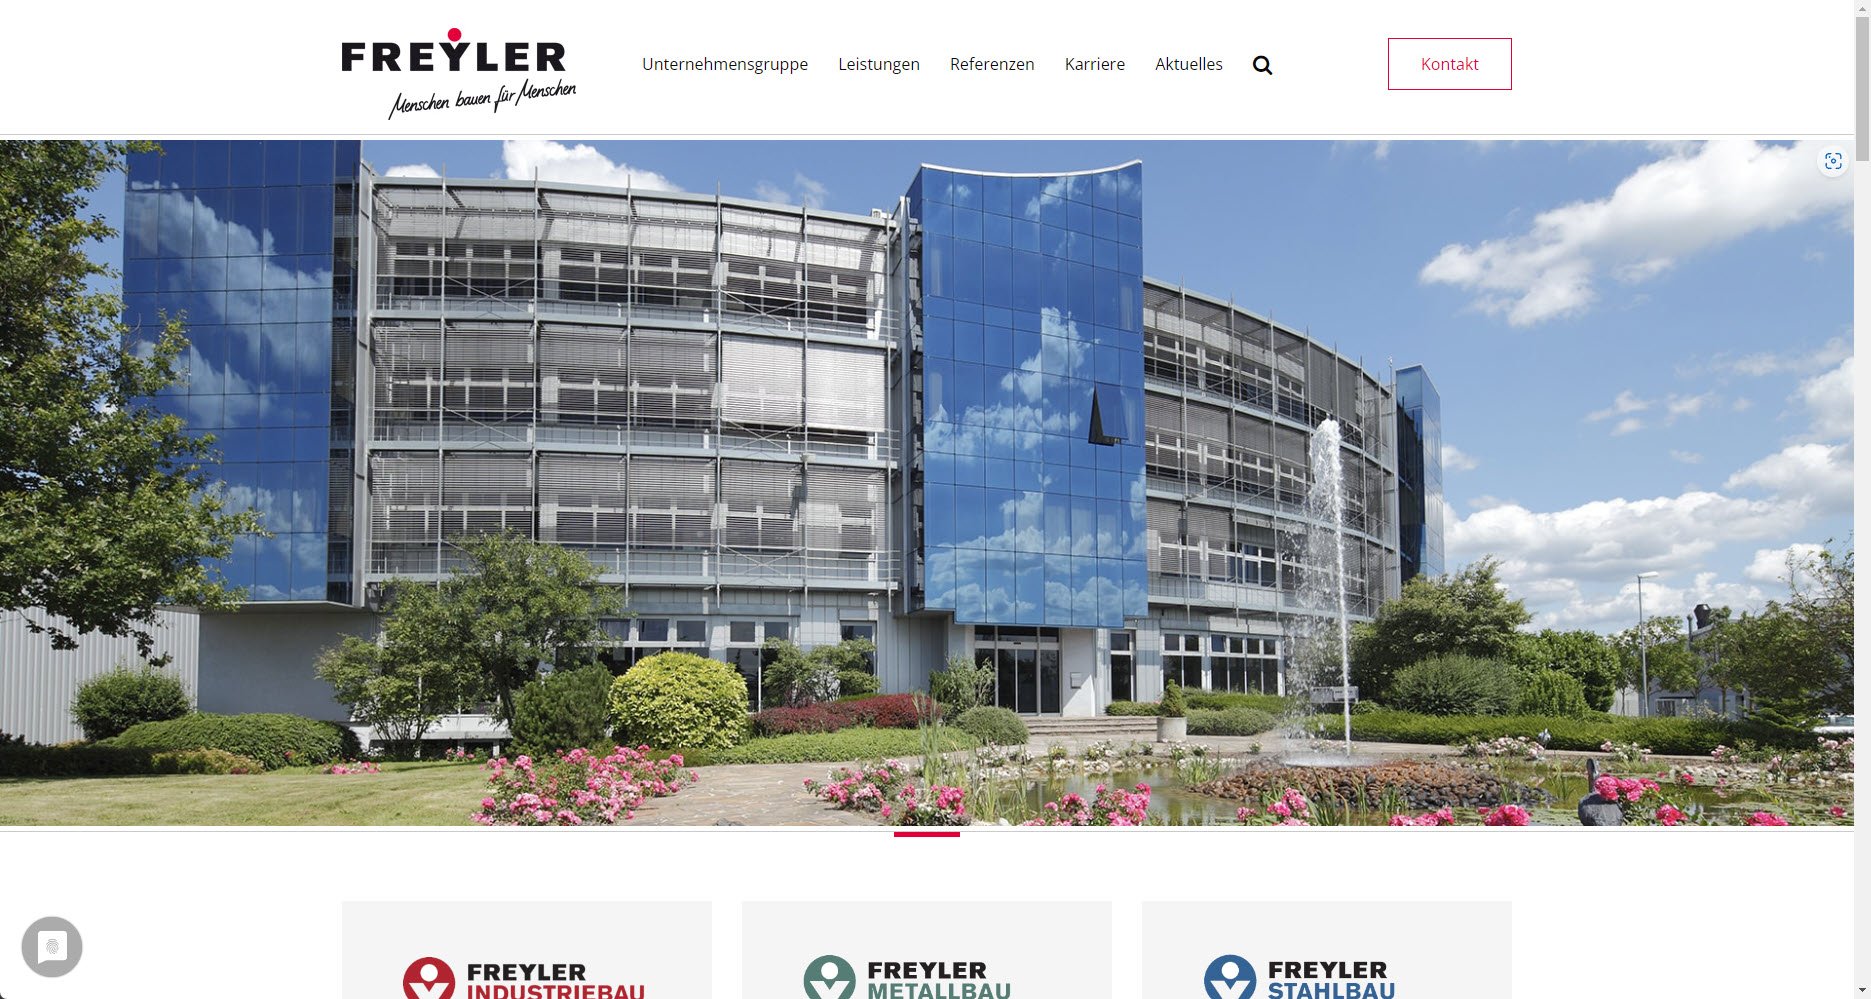 FREYLER GmbH & Co.KG